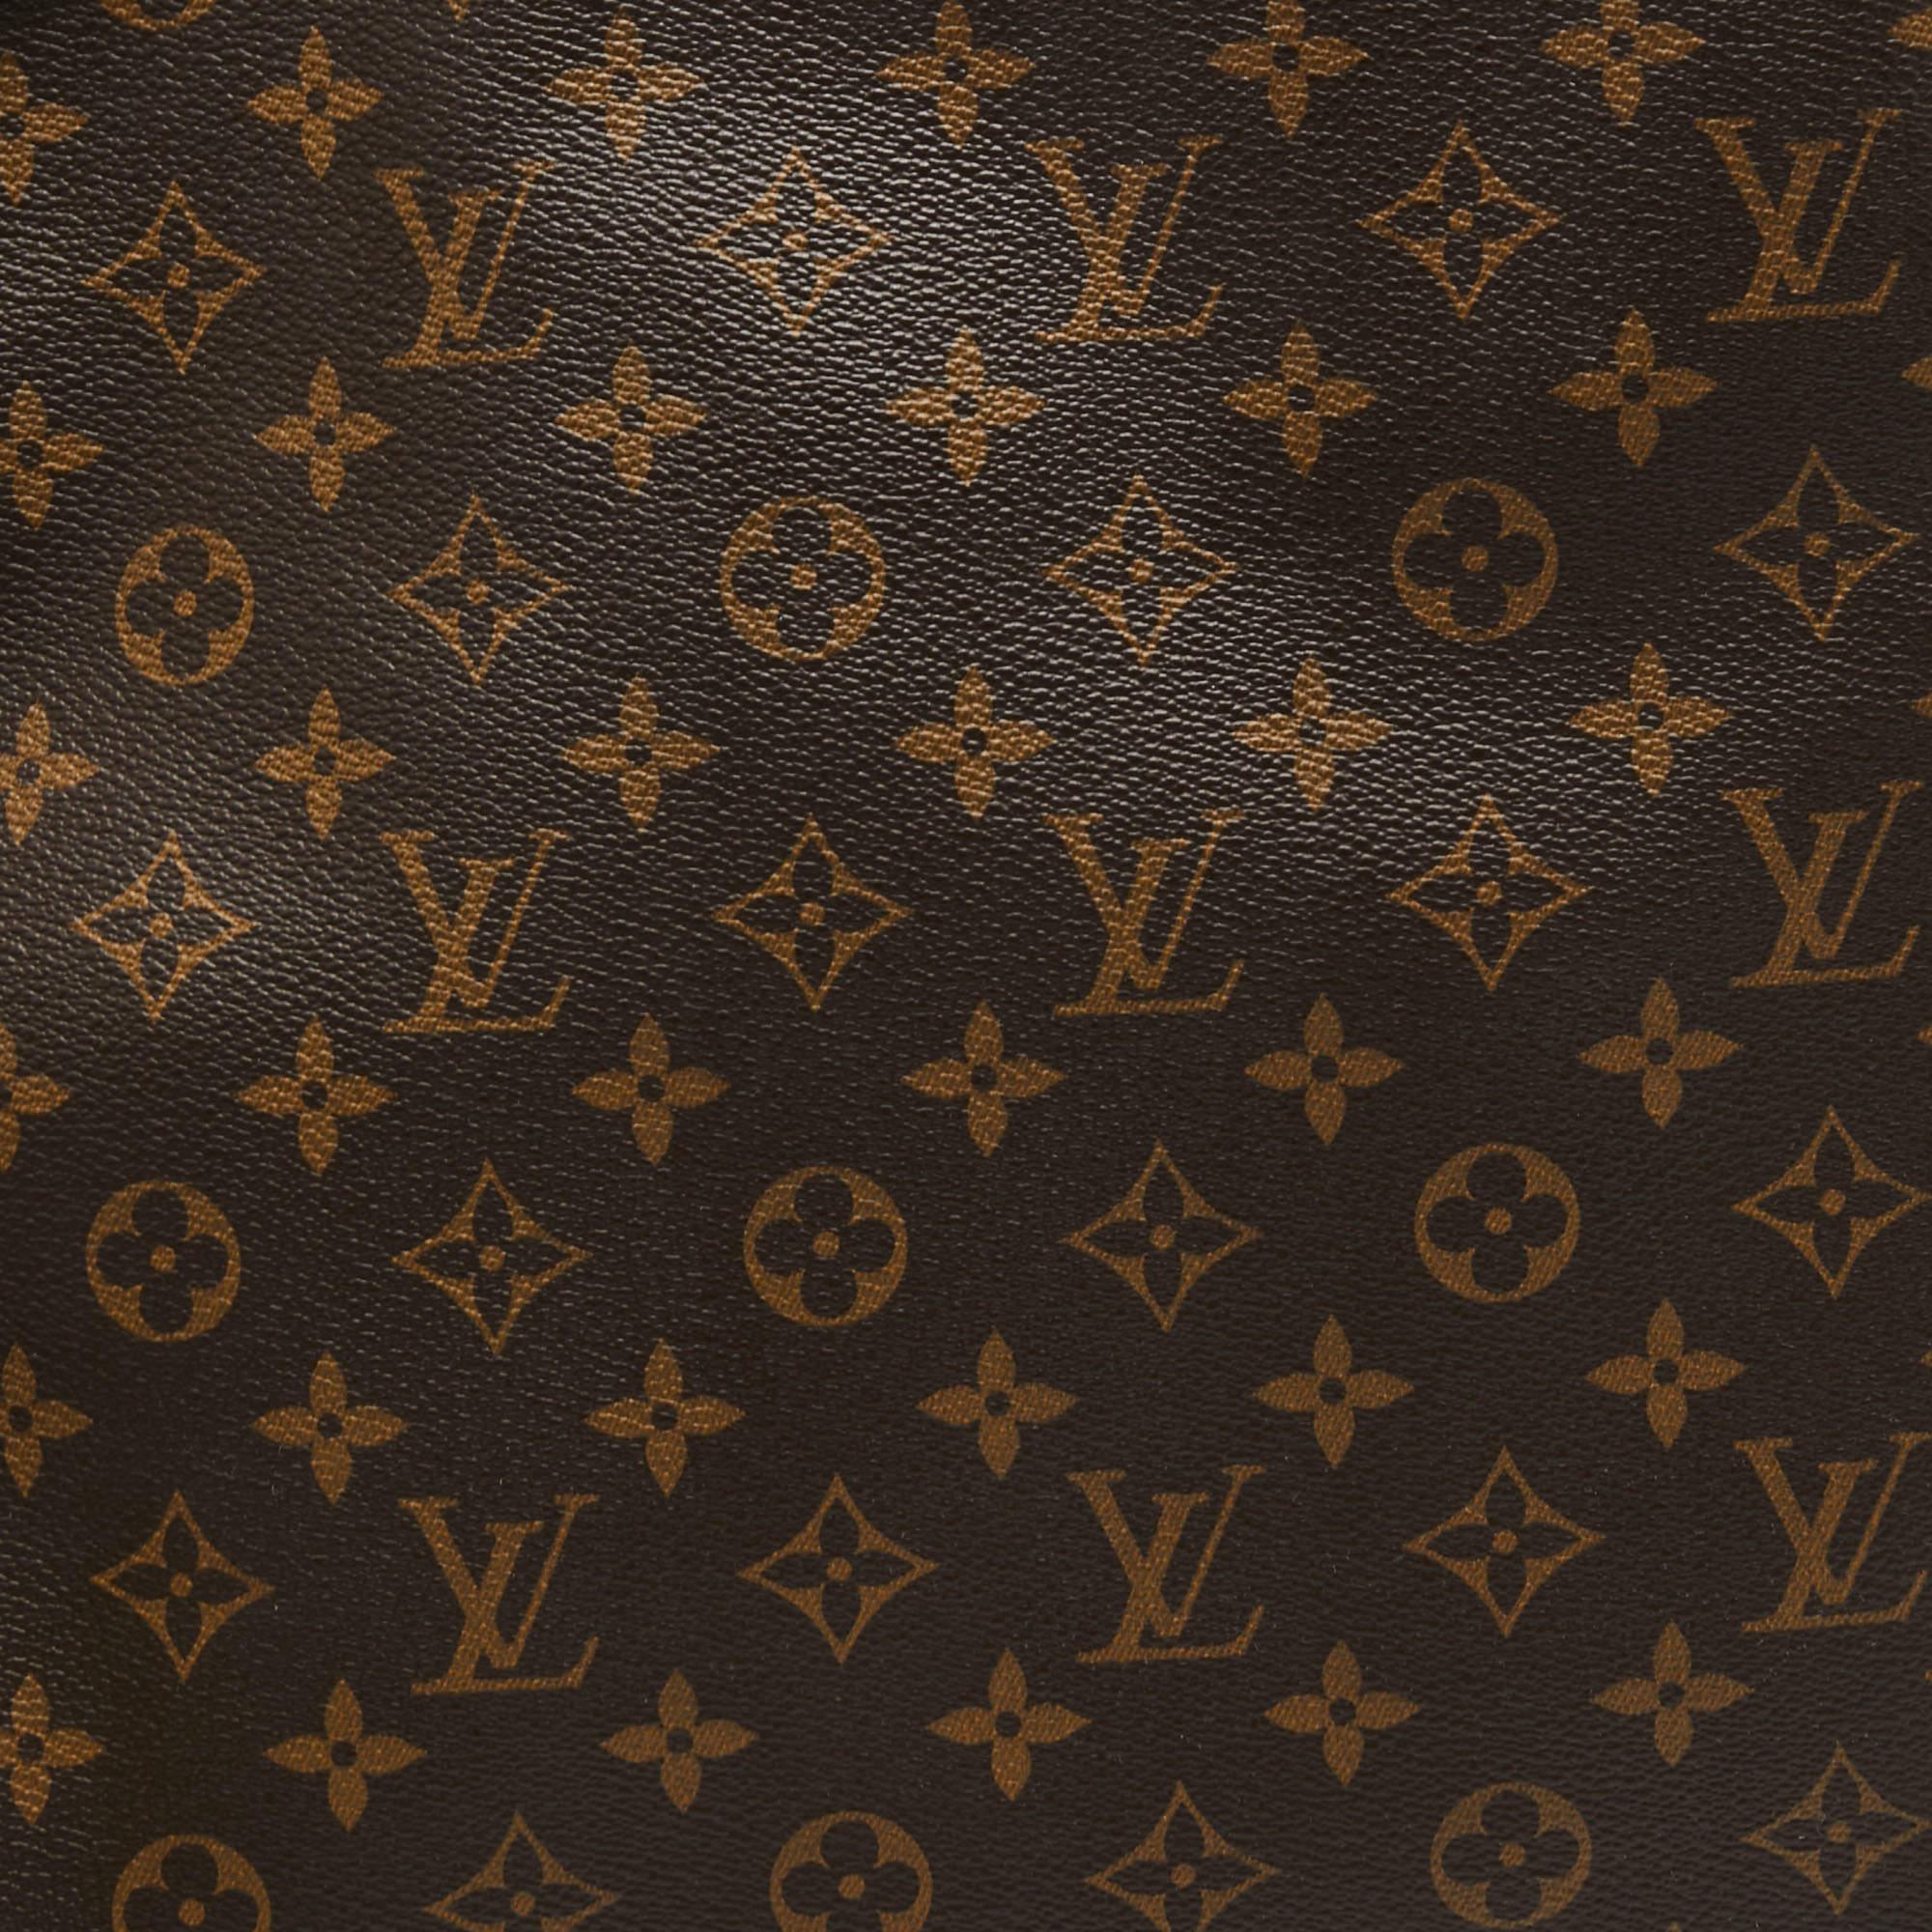 Louis Vuitton Monogram Canvas Artsy MM Bag 6